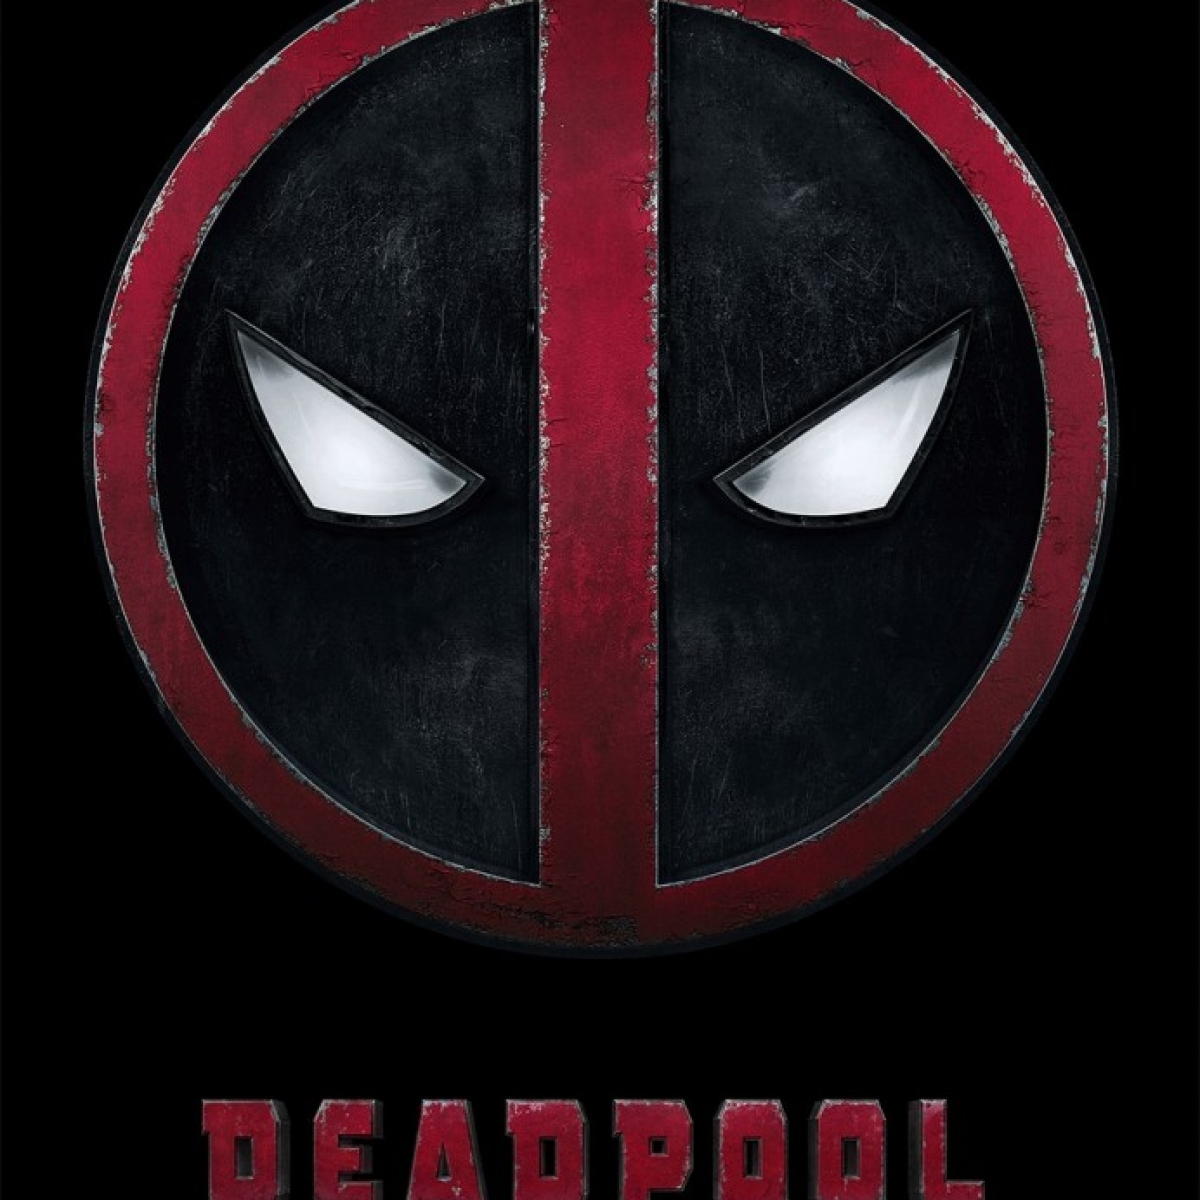 deadpool-movie-poster-692x1024-1200x1200.jpg